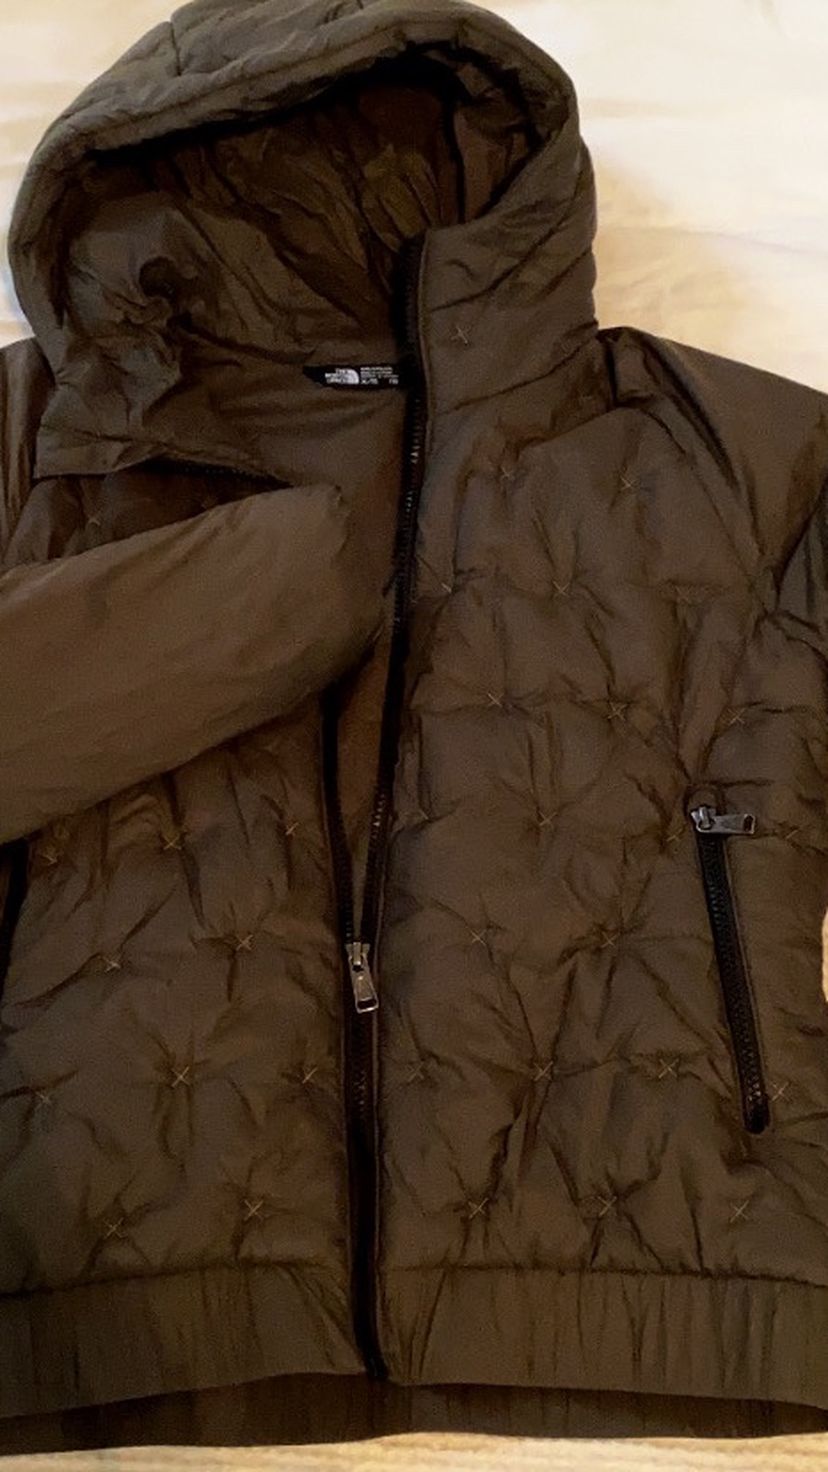 Northface Jacket Fits Girls XL Or Women’s Size Small- Waterproof